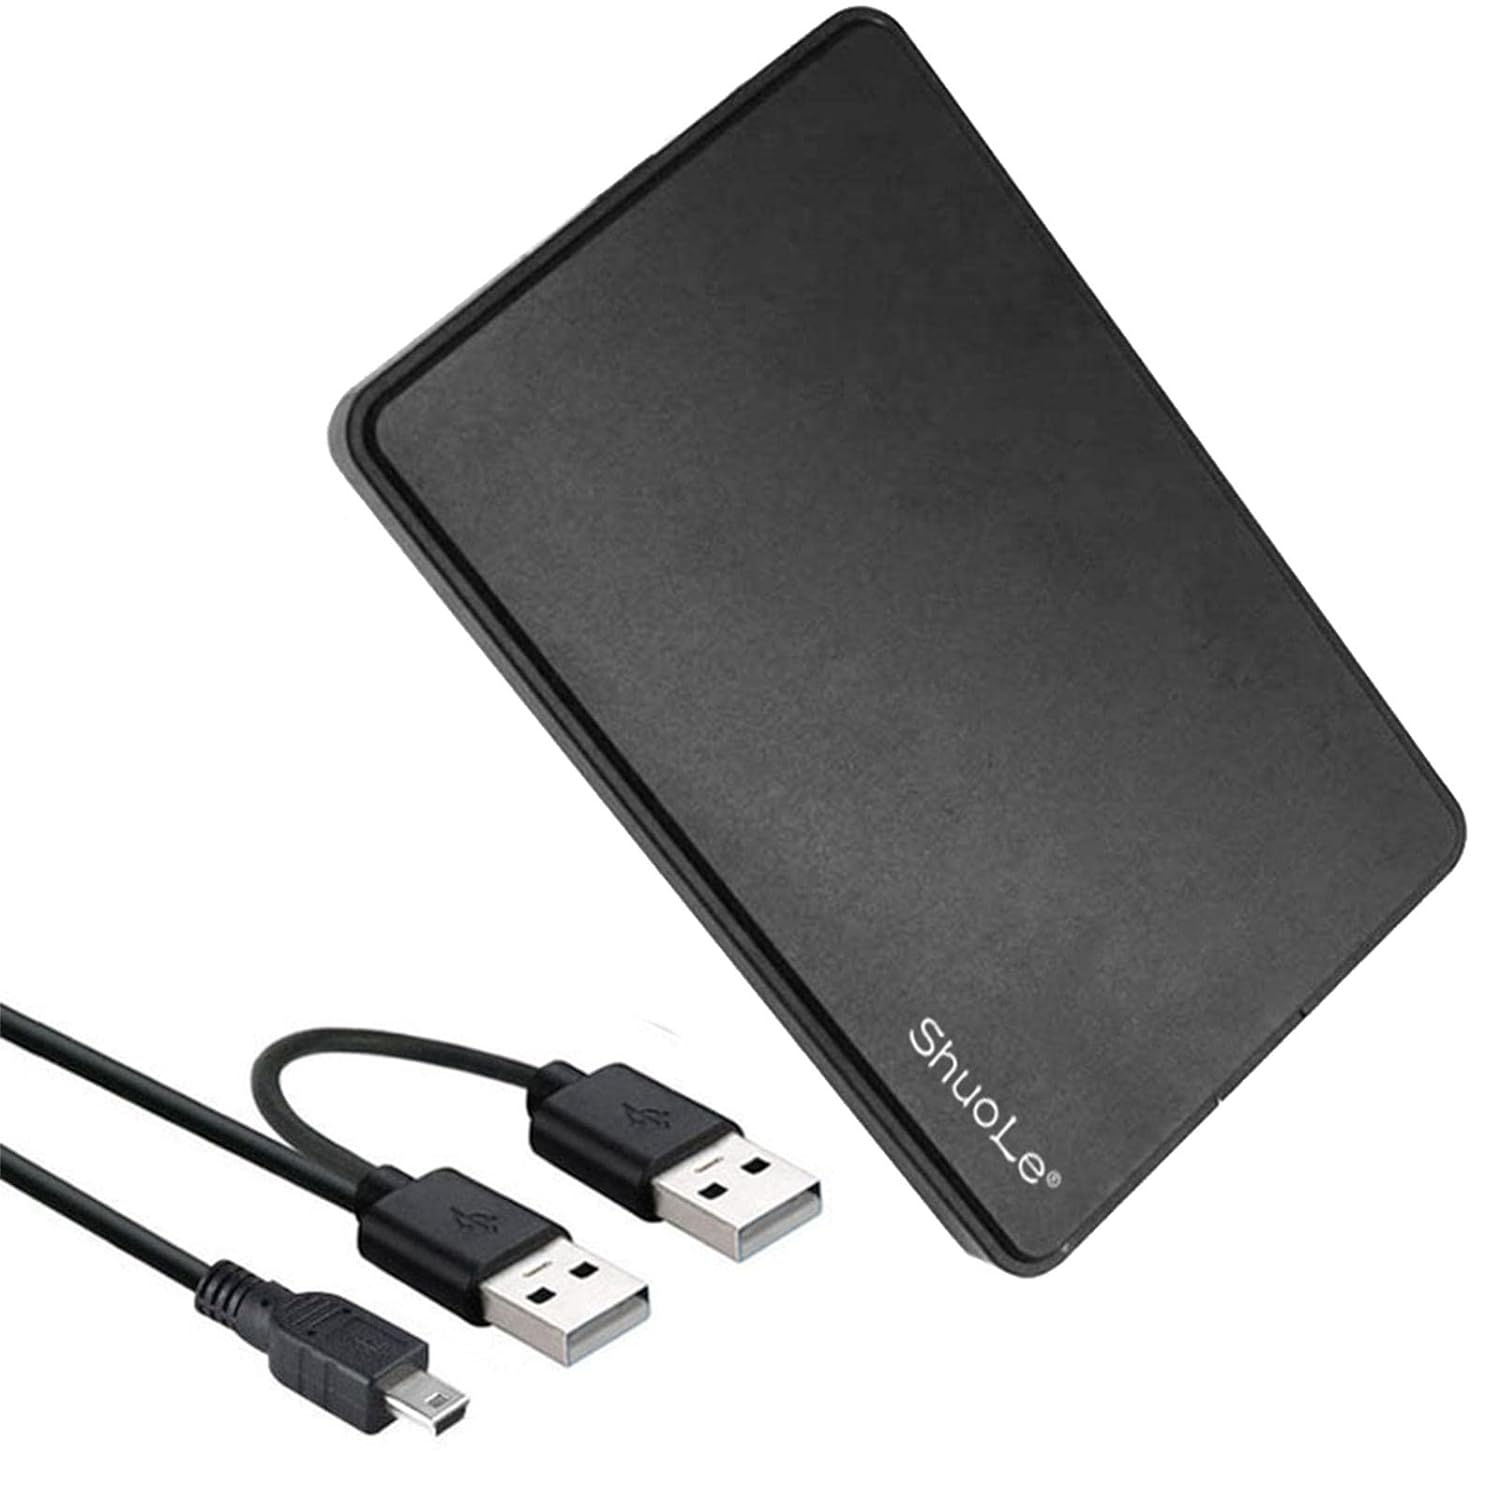 Portable External Hard Drive USB 2.0 2TB for Laptop for Mac Black